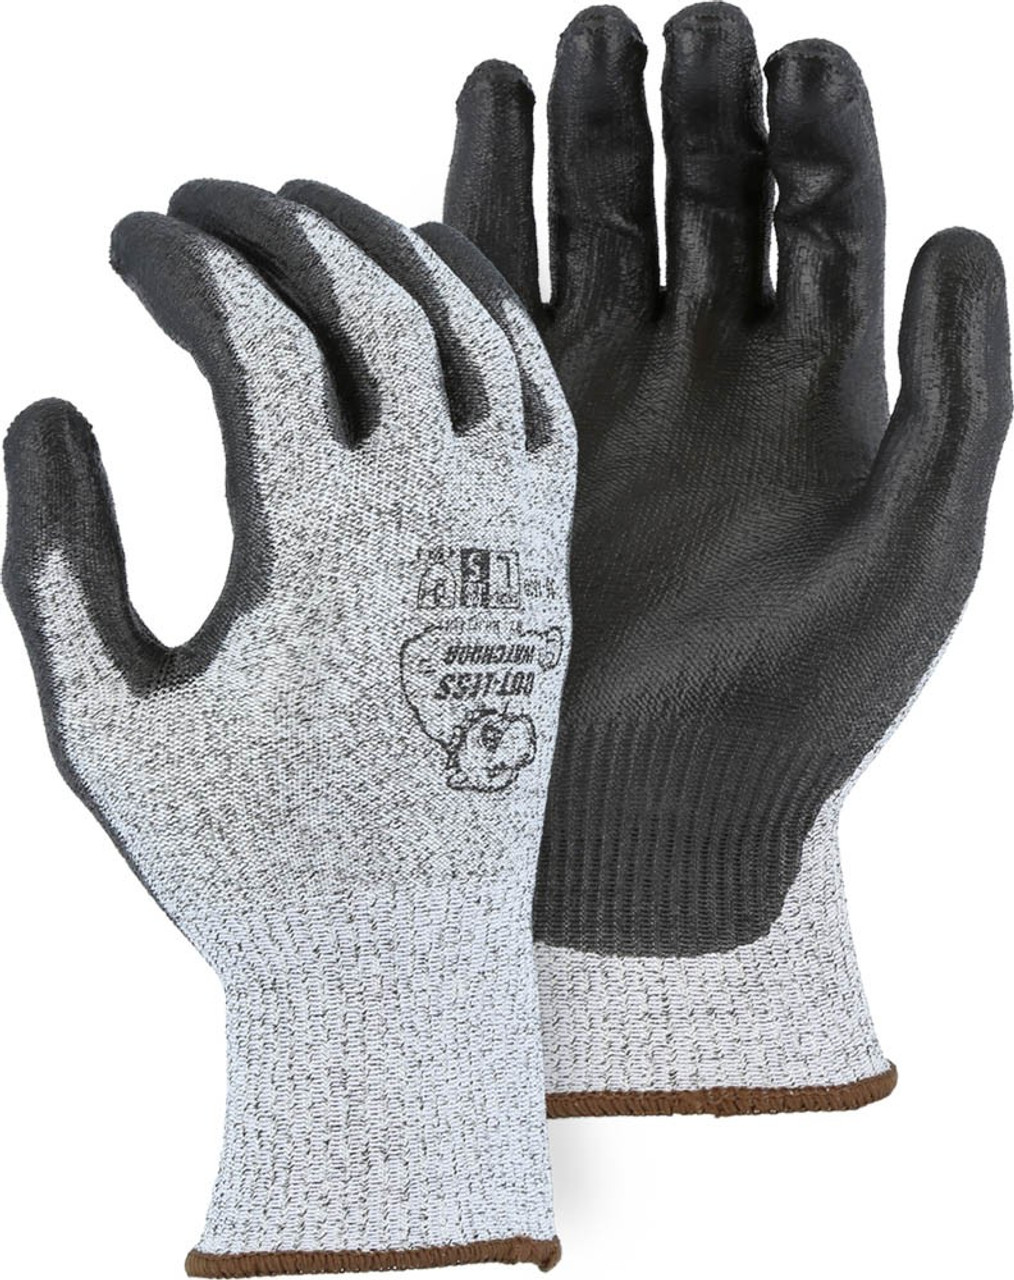 Majestic Glove Cut-Less Watchdog 35-1500 KorPlex/HPPE/Nylon/Spandex  Seamless Knit Cut Resistant Gloves - Dozen - Western Safety